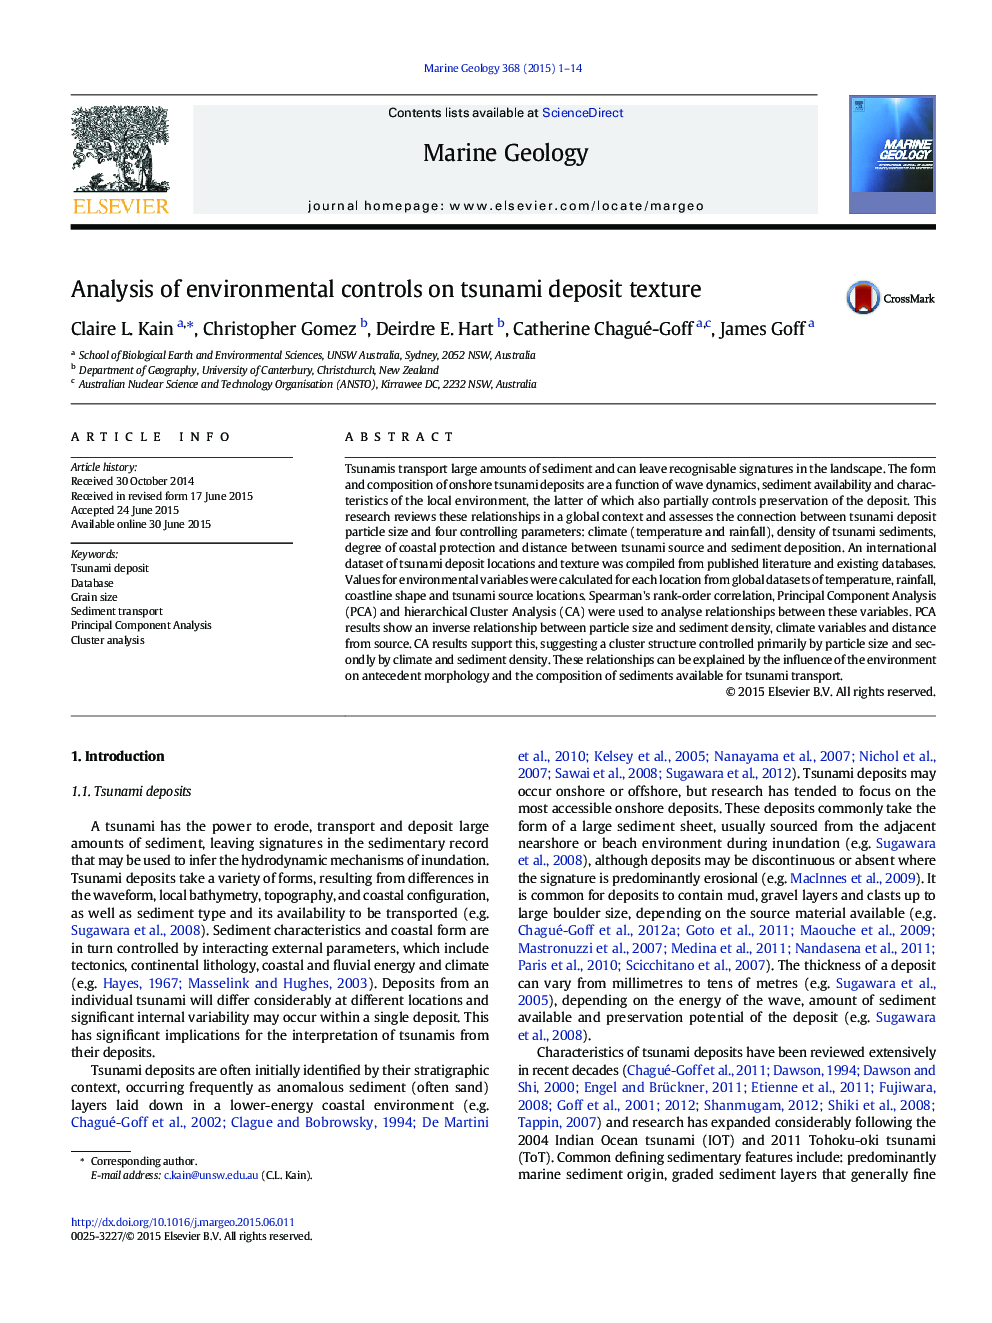 Analysis of environmental controls on tsunami deposit texture